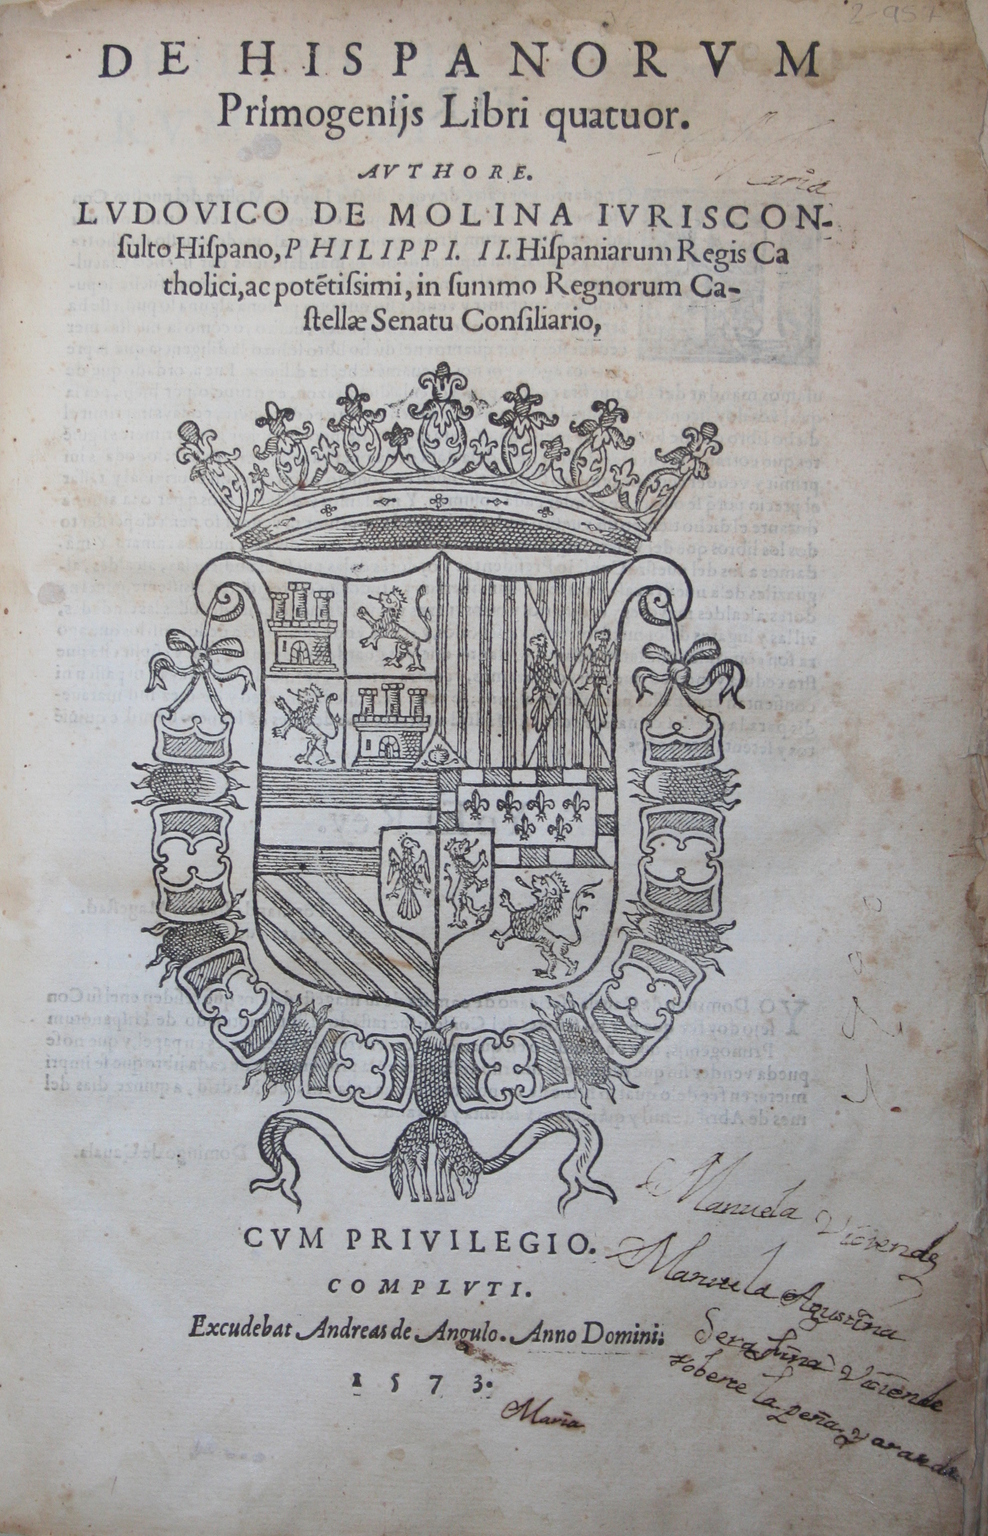 De Hispanorum primogeniis, 1573